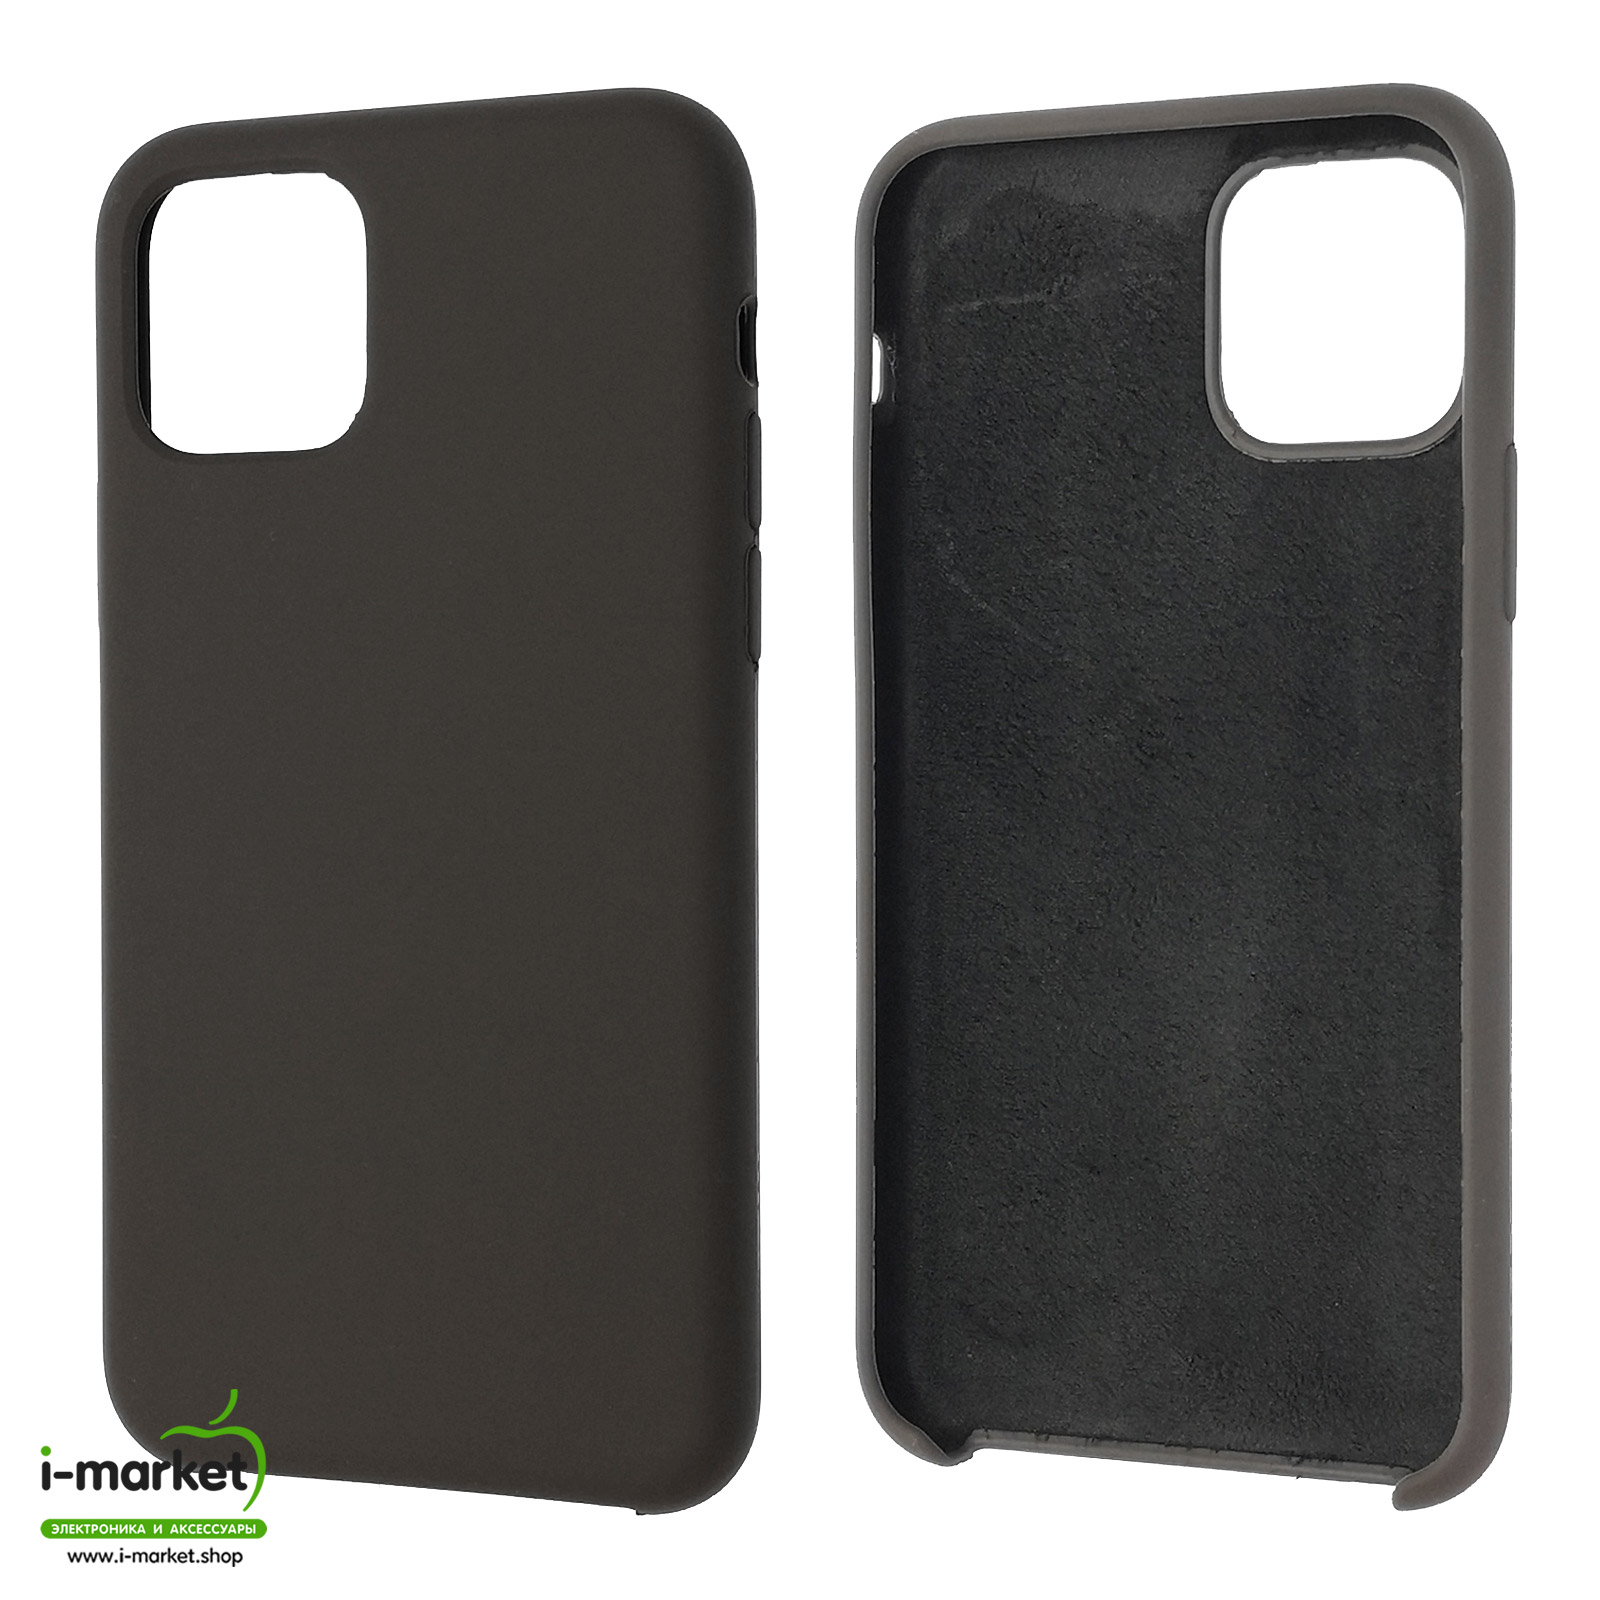 Чехол накладка Silicon Case для APPLE iPhone 11 Pro 2019, силикон, бархат, цвет темно серый